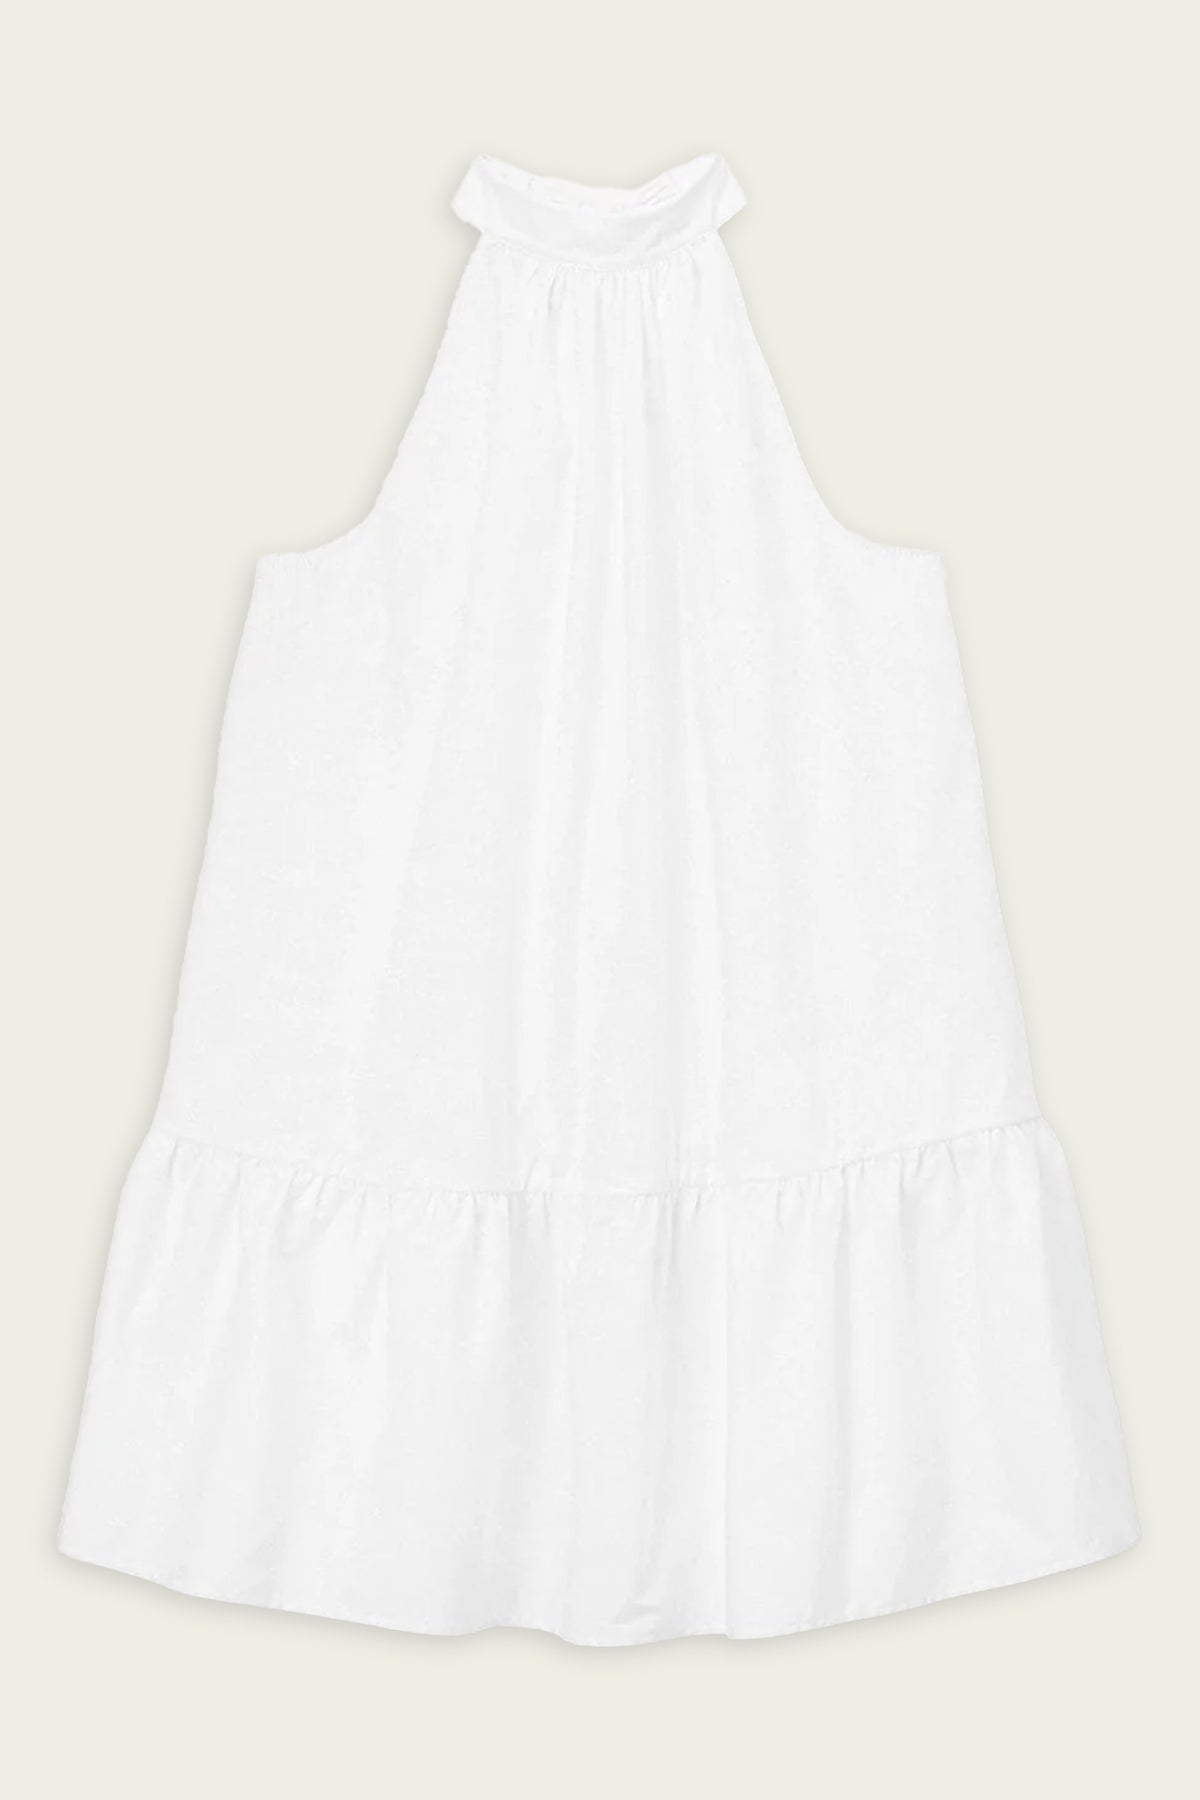 Mini Marlowe Dress in White - shop-olivia.com